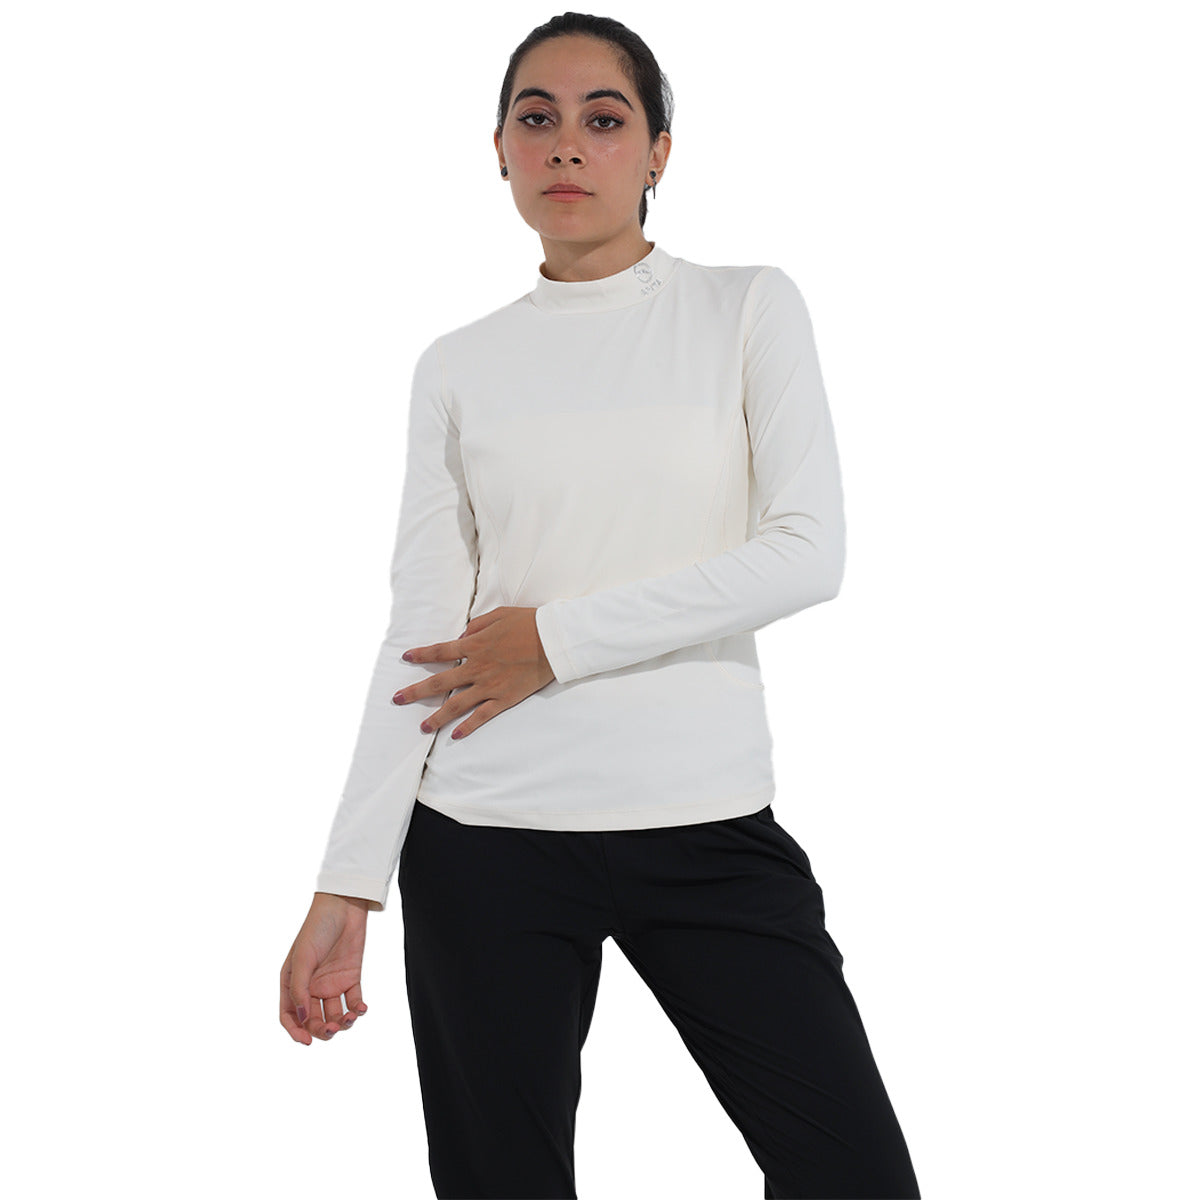 Anta Cross-Training Cotton T-Shirt For Women, White